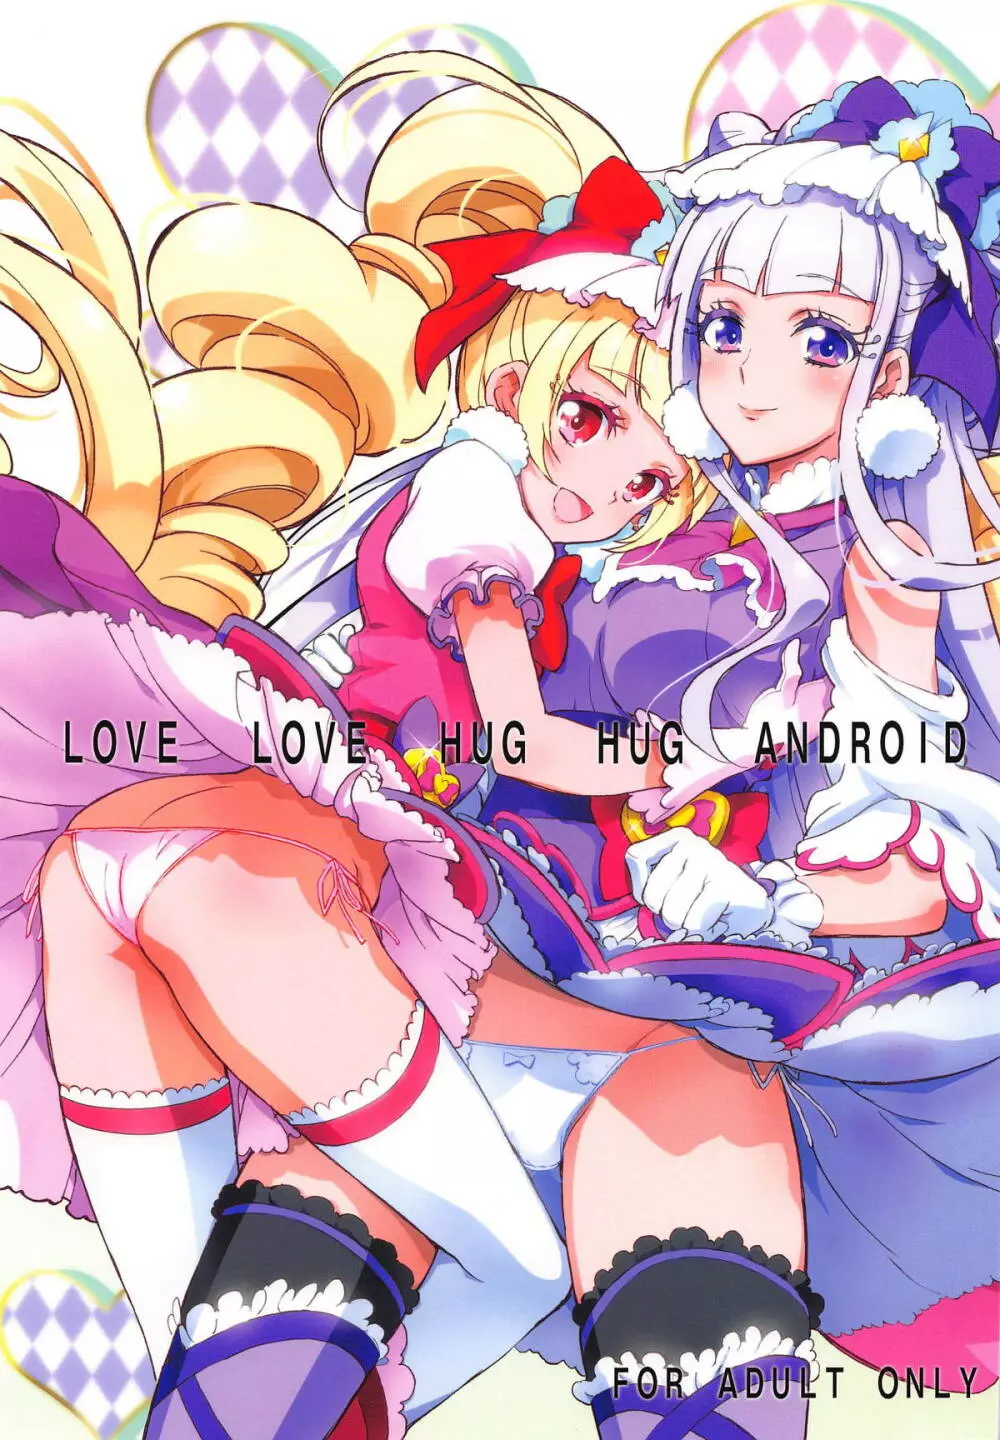 LOVE LOVE HUG HUG ANDROID - page1